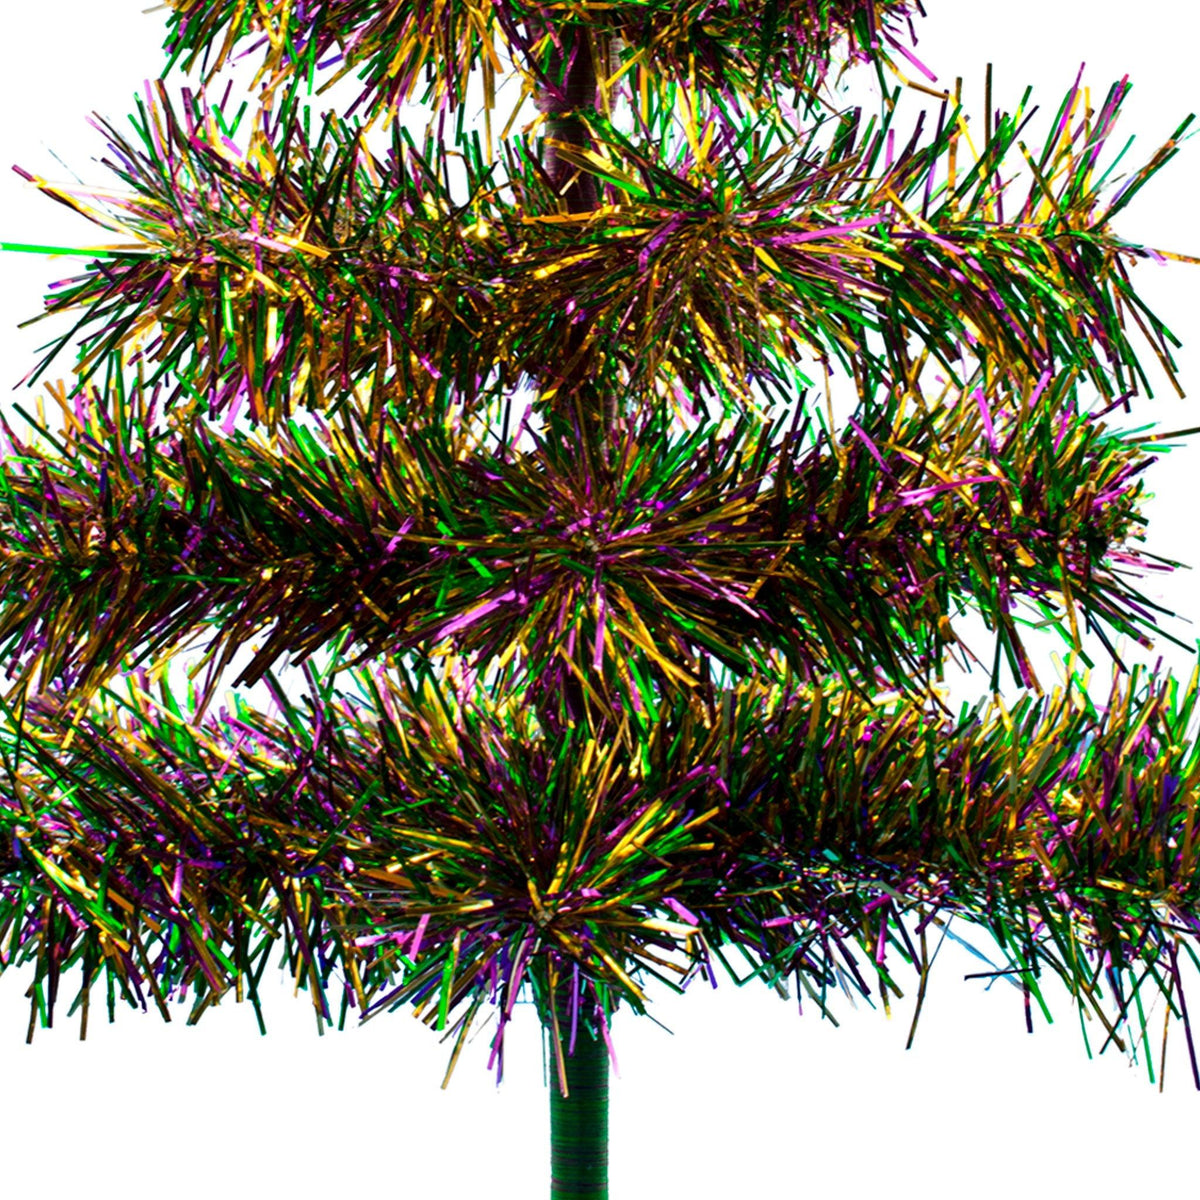 Lee Display's Festive Mardi Gras Tinsel Christmas Trees on sale only at leedisplay.com